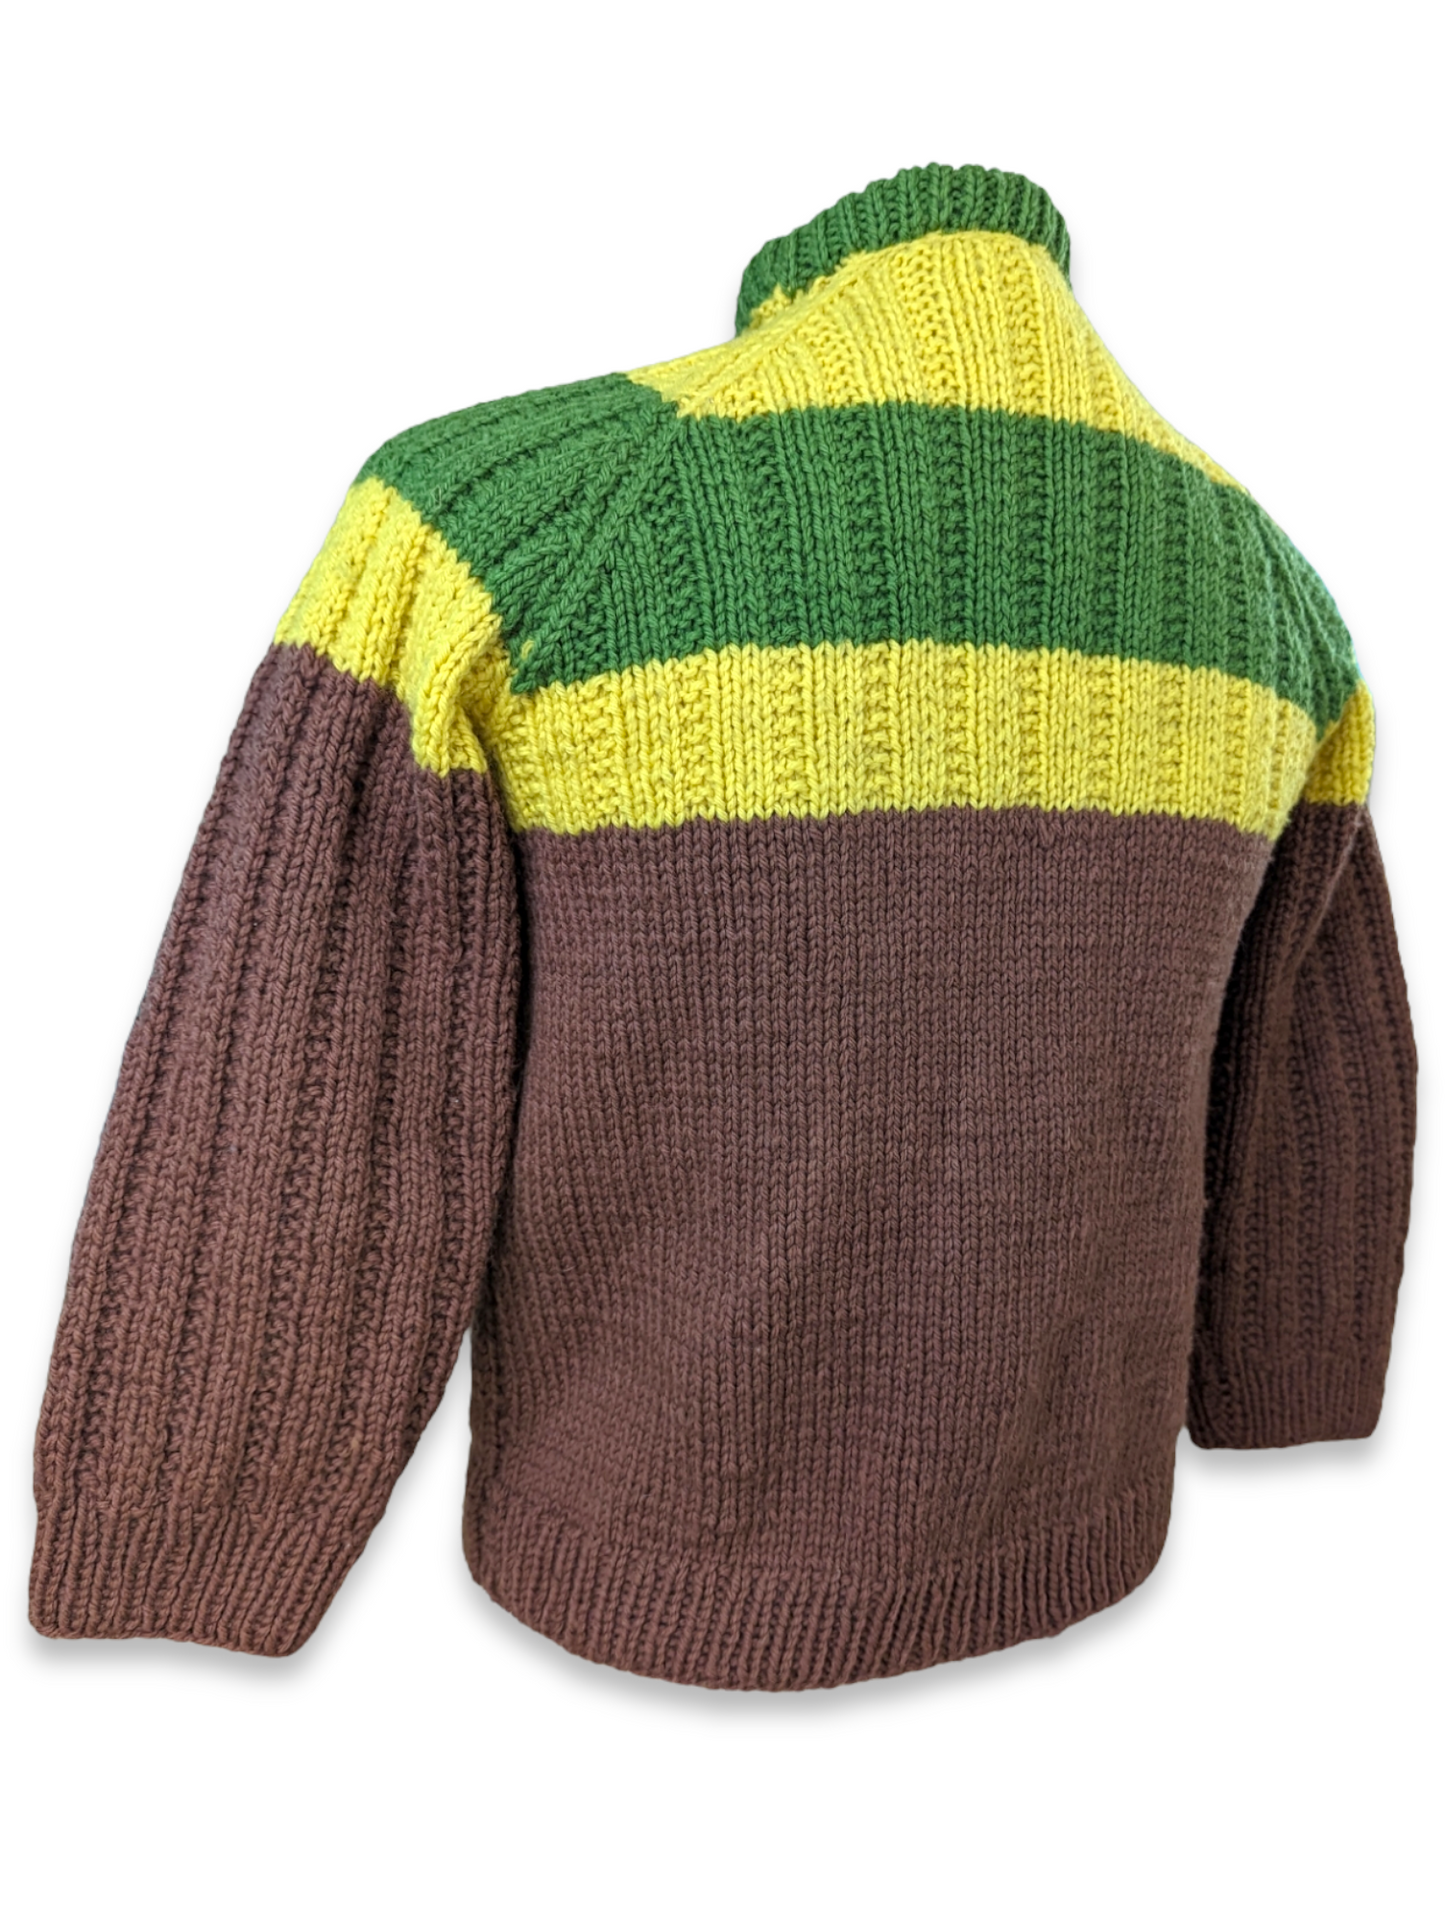 1970s Color Block Handmade Knit Zip Up Sweater